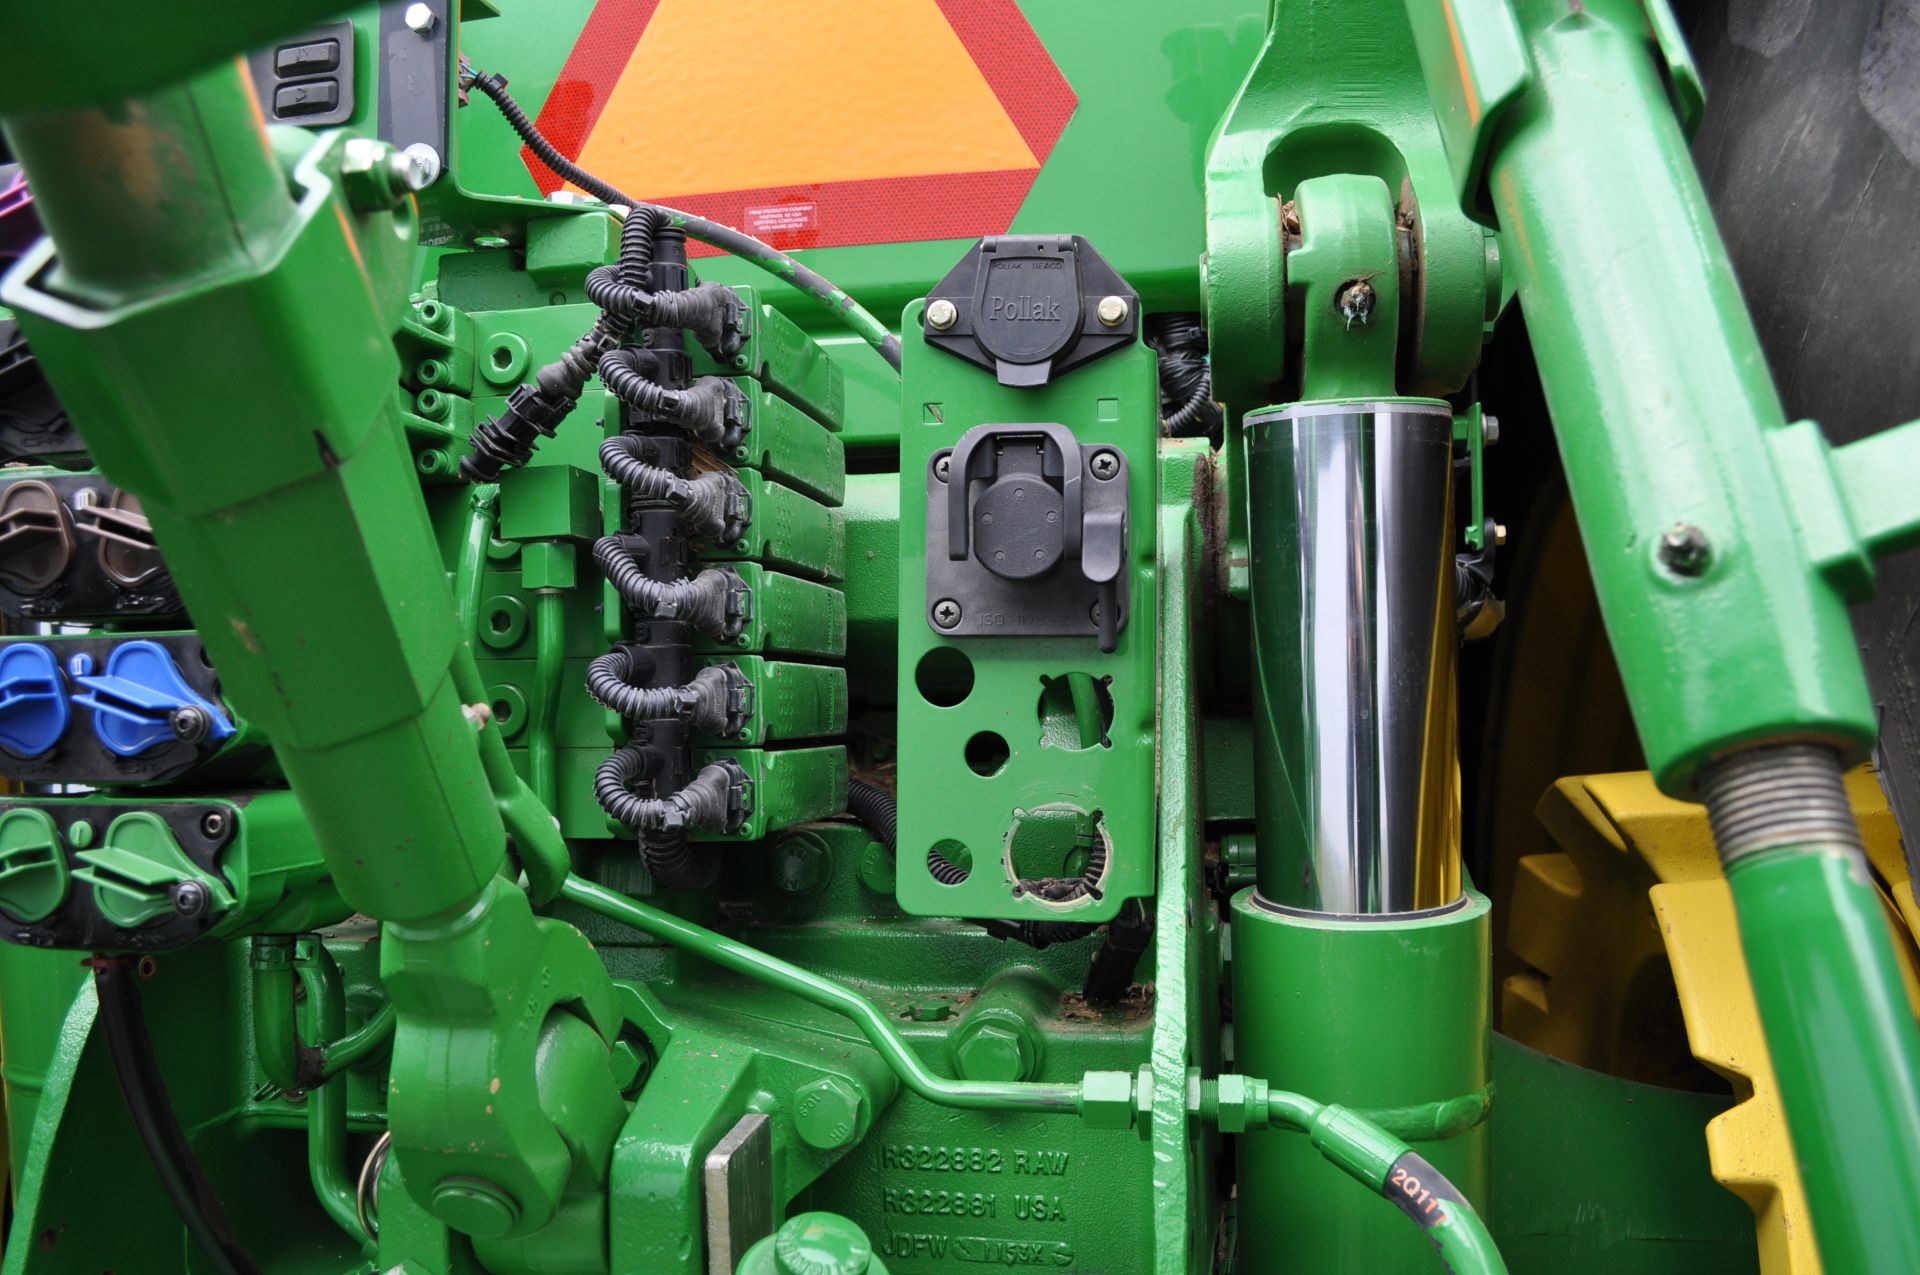 John Deere 8285R tractor, MFWD, 480/80 R 46 duals, 420 / 90 R 30 front, fenders, powershift - Image 23 of 31